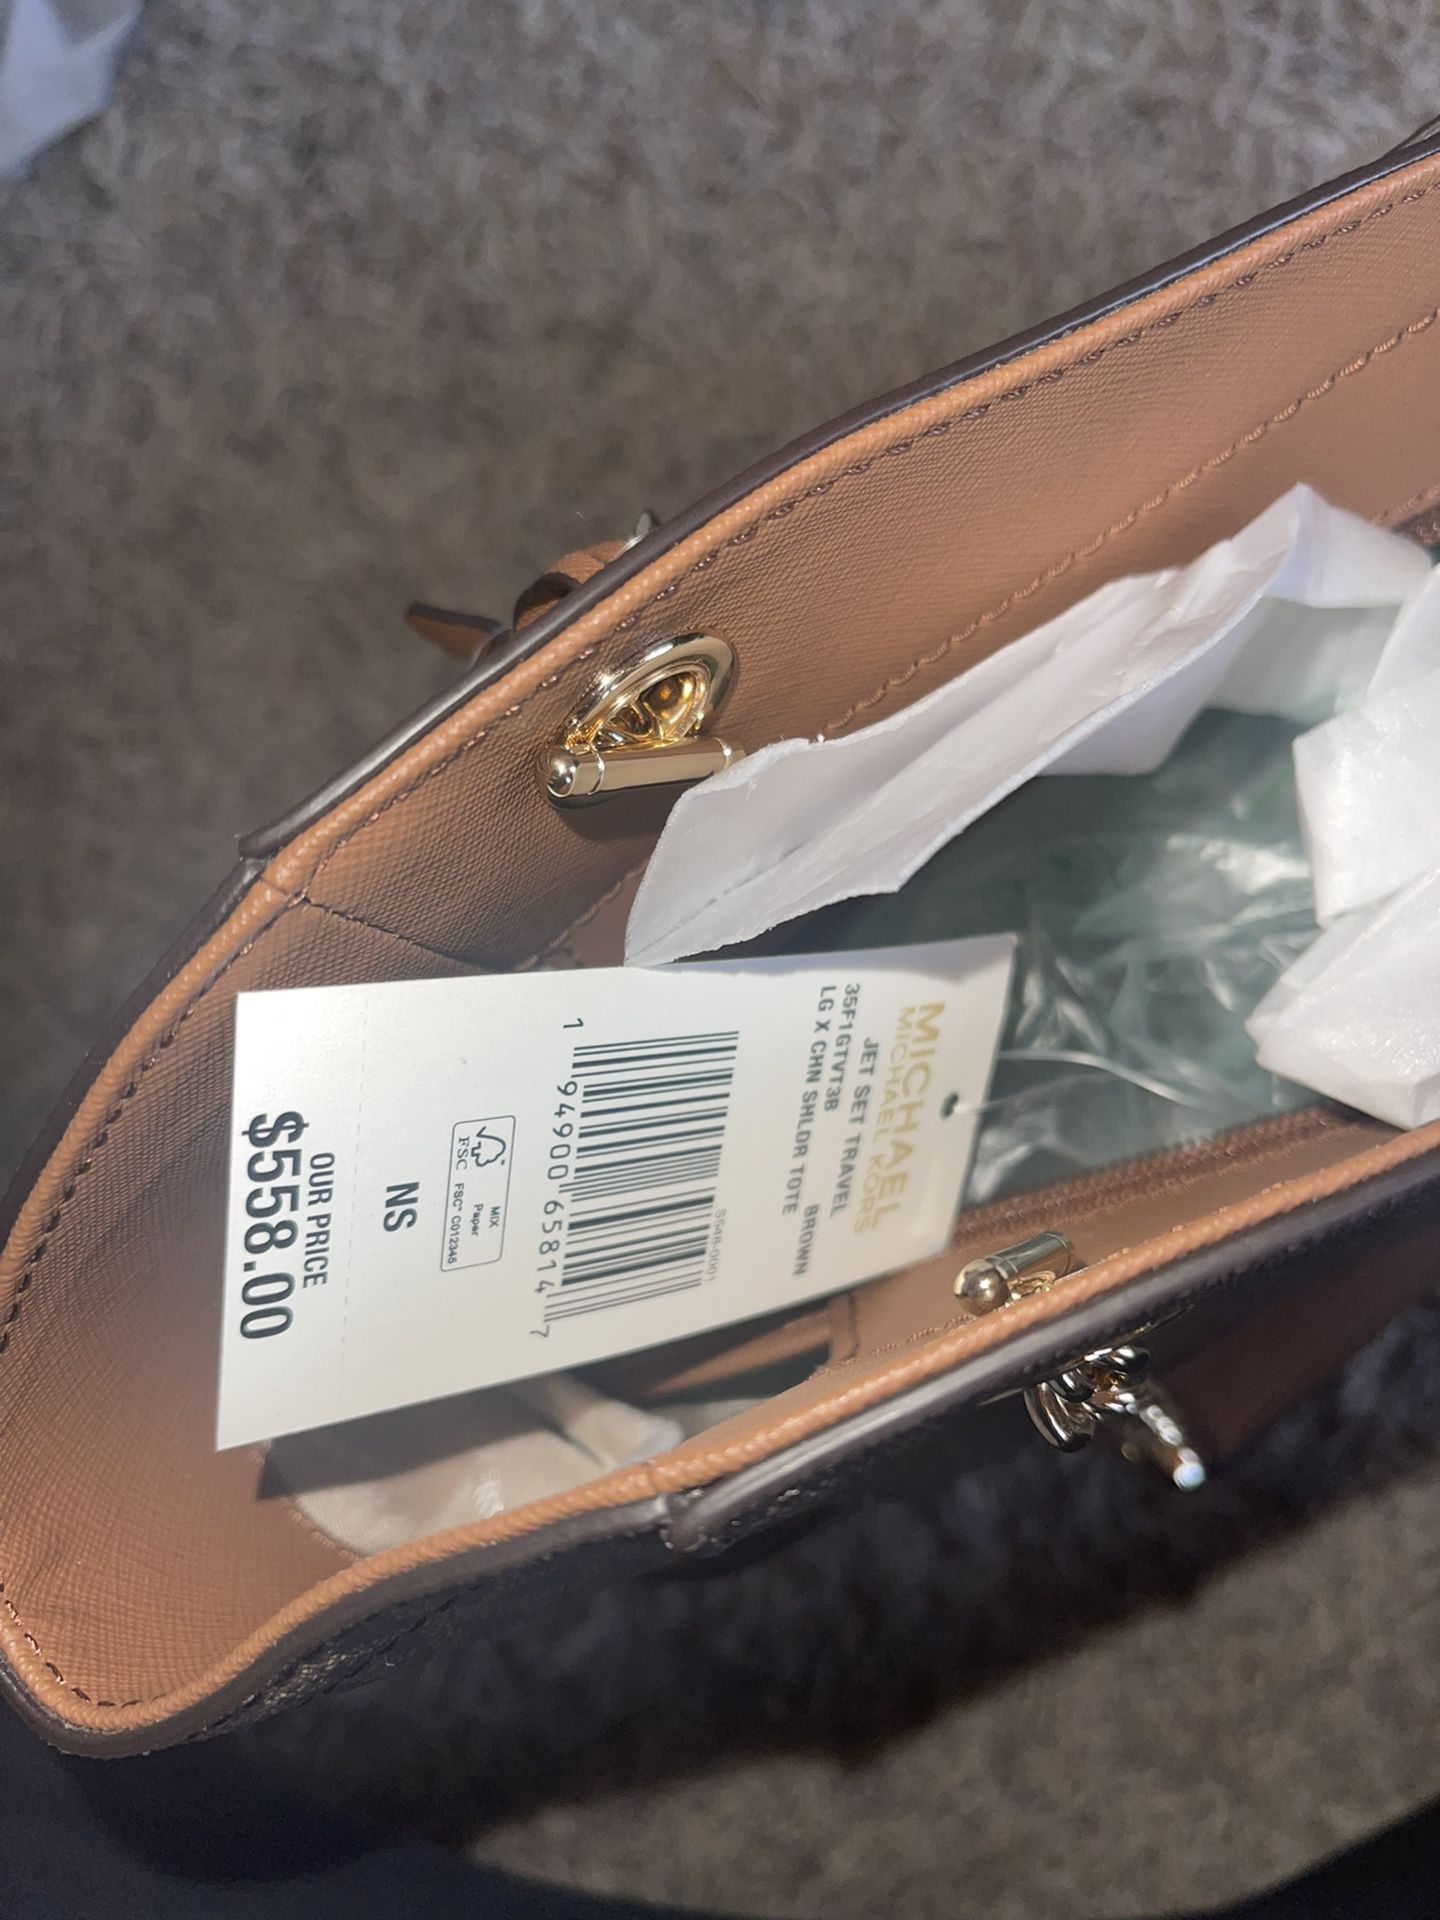 Michael Kors Jet Set Travel Large Saffiano Leather Purse for Sale in  Evesham, NJ - OfferUp